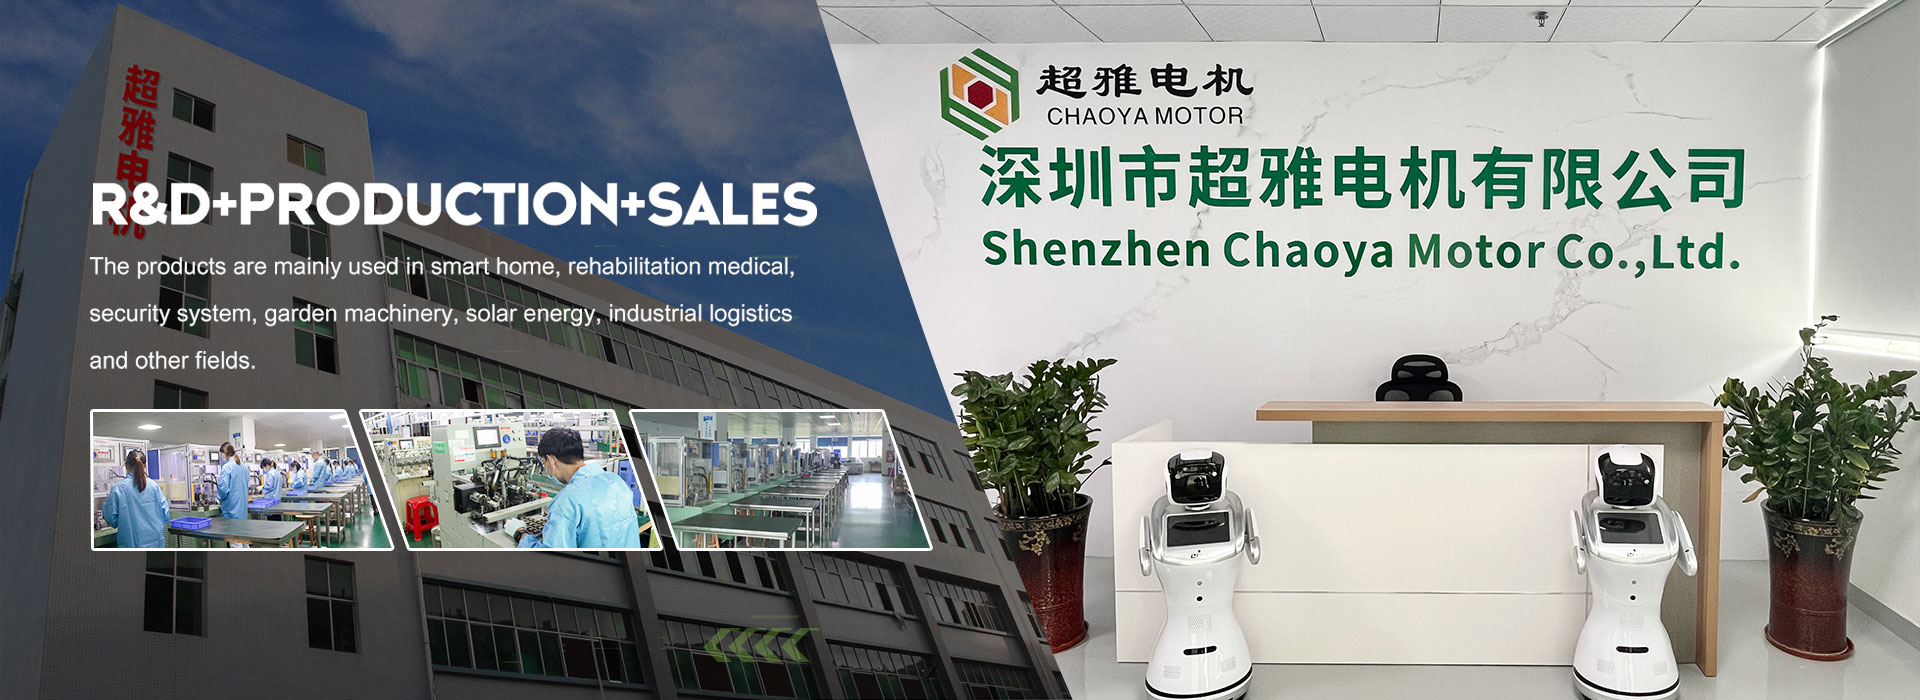 Shenzhen Chaoya Motor Co., Ltd